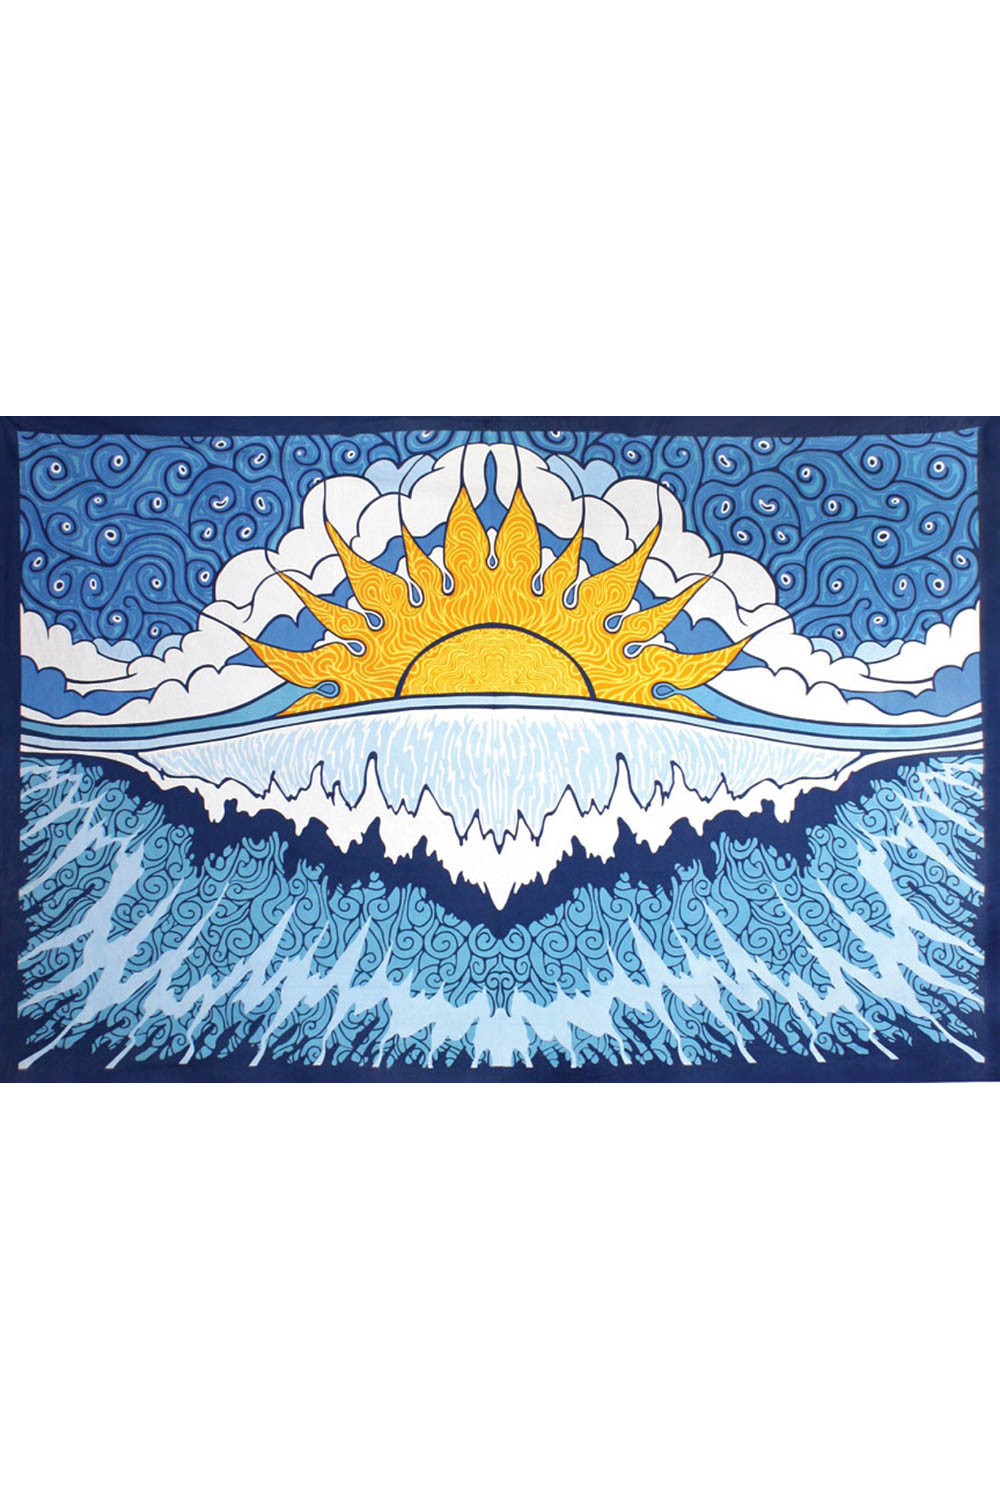 Sun Wave Tapestry 60x90 - Art by Chris Pinkerton   **SALE**